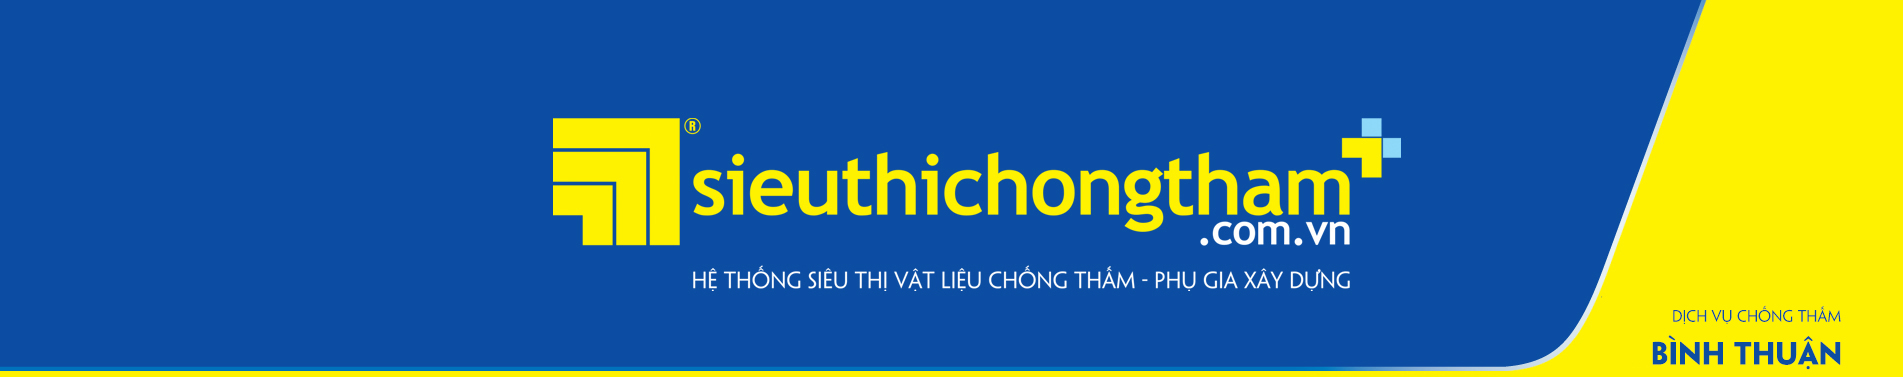 Dich Vu Chong Tham Binh Thuan